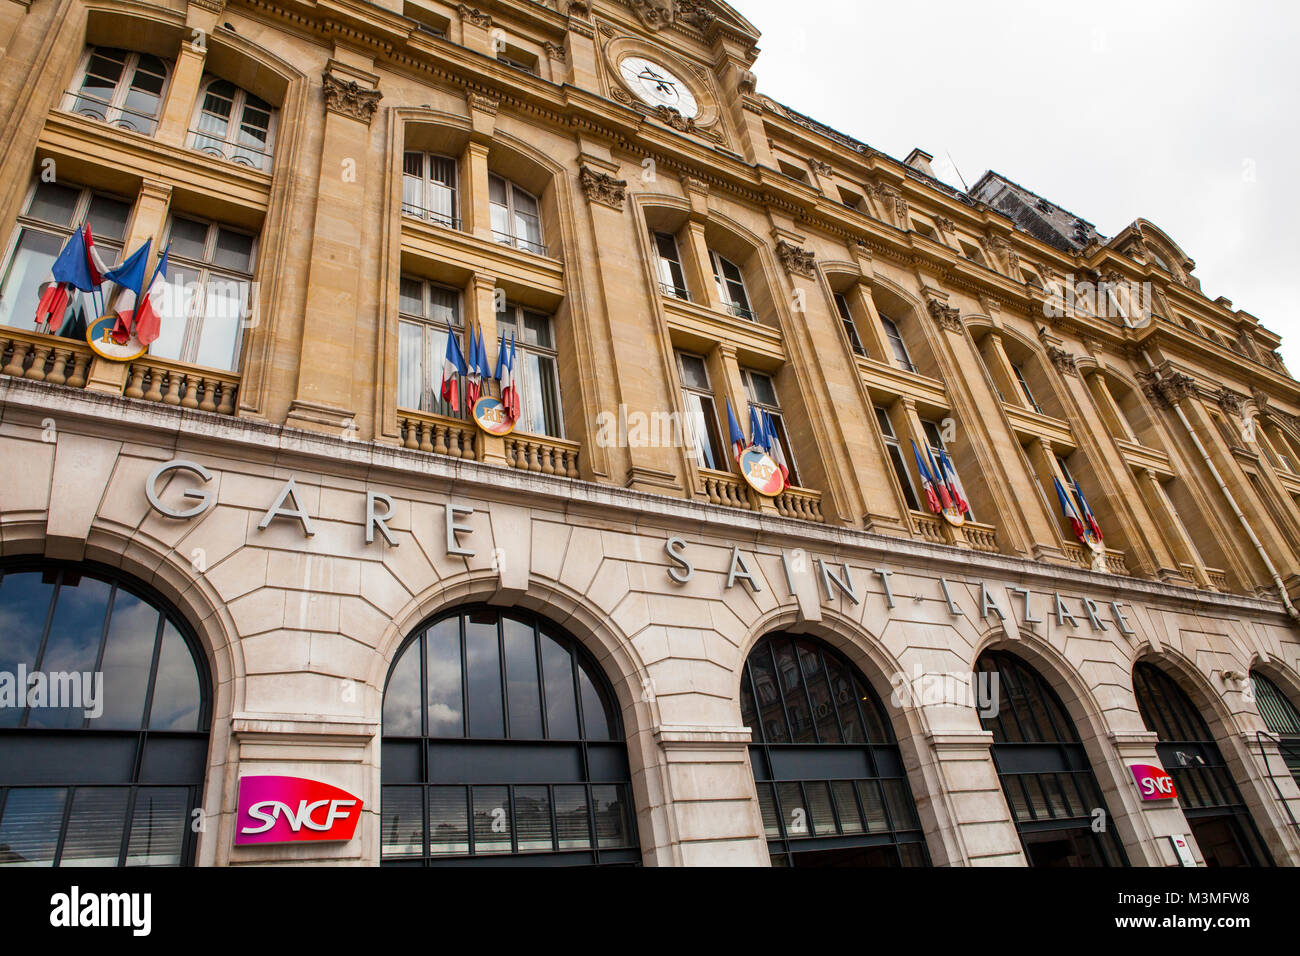 PARIS, FRANCE - JULY 11, 2014: Saint Lazare railway station facade in Paris Stock Photo